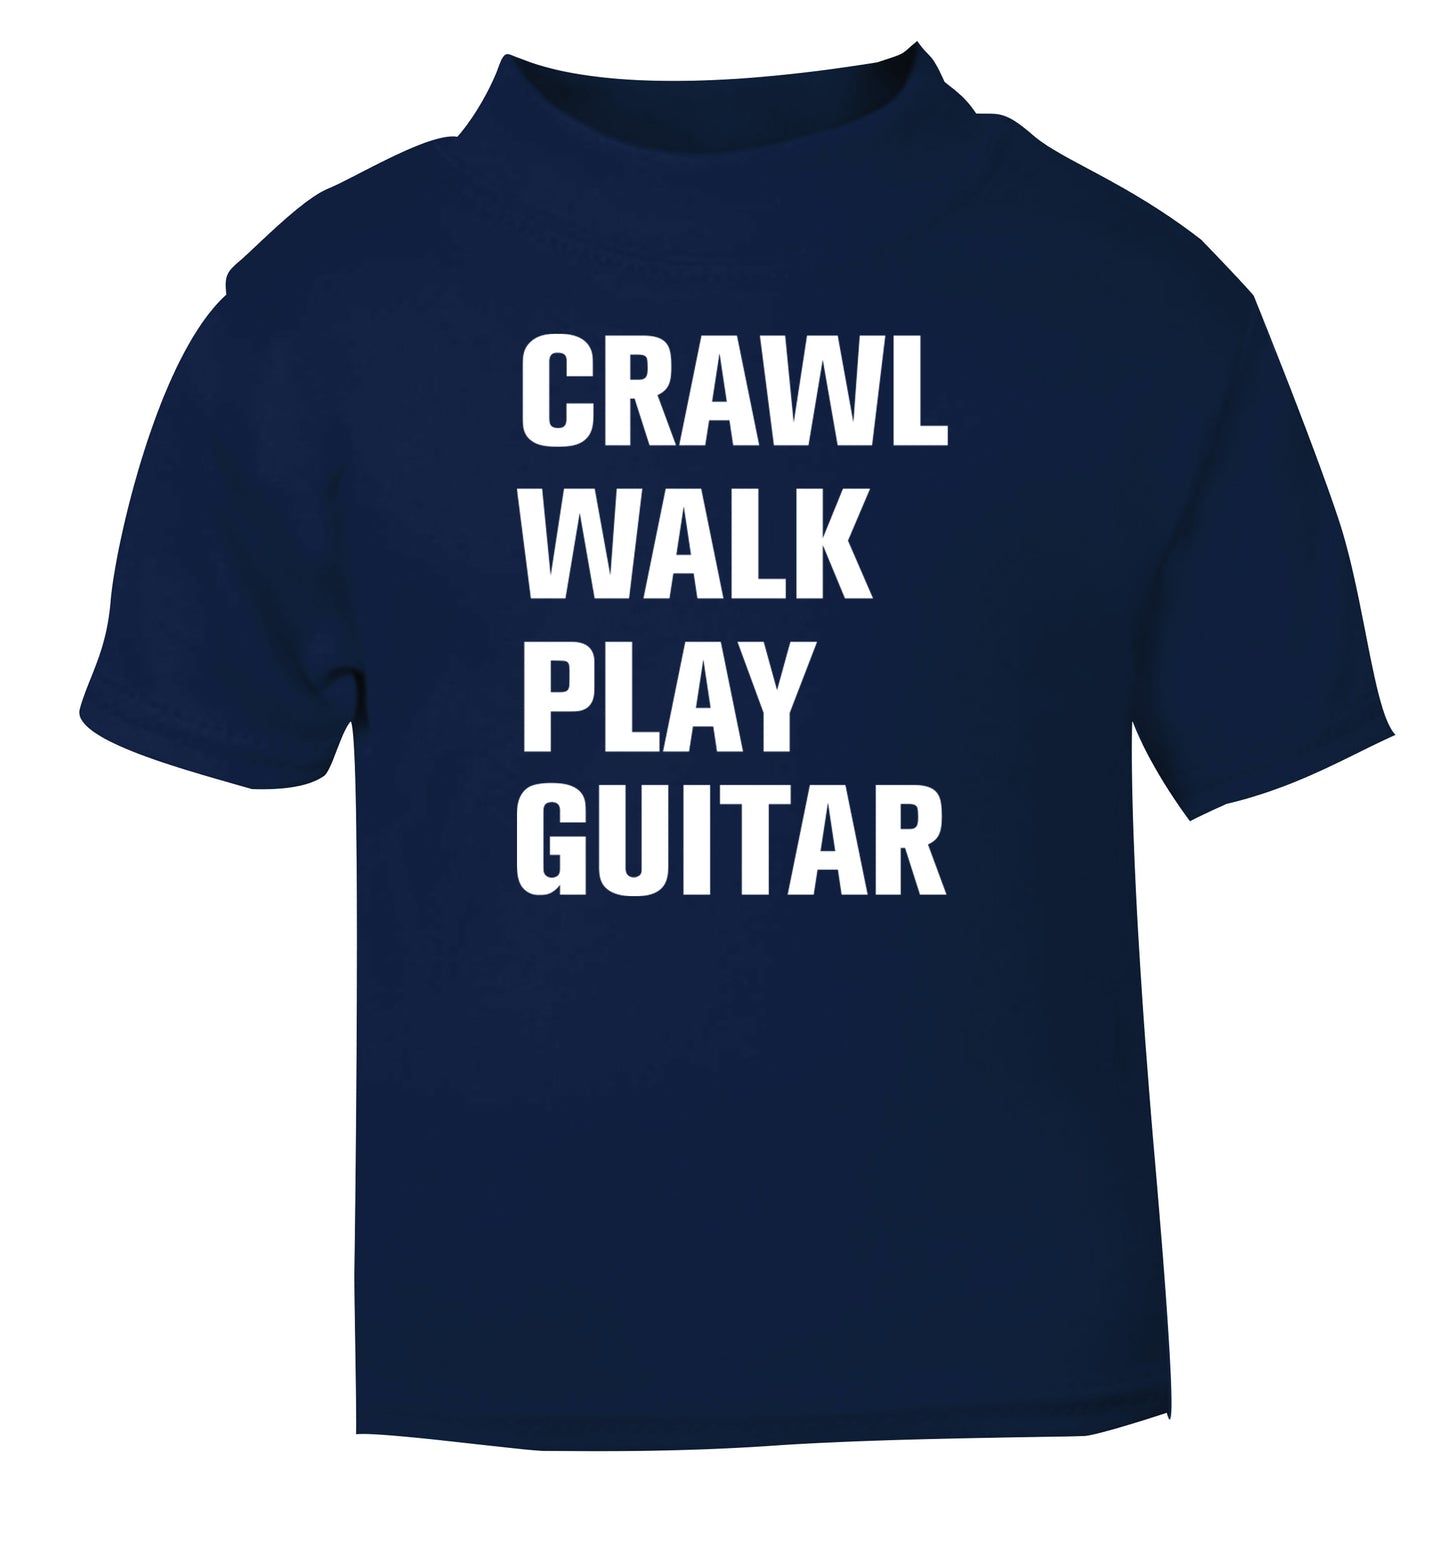 Crawl walk play guitar navy Baby Toddler Tshirt 2 Years